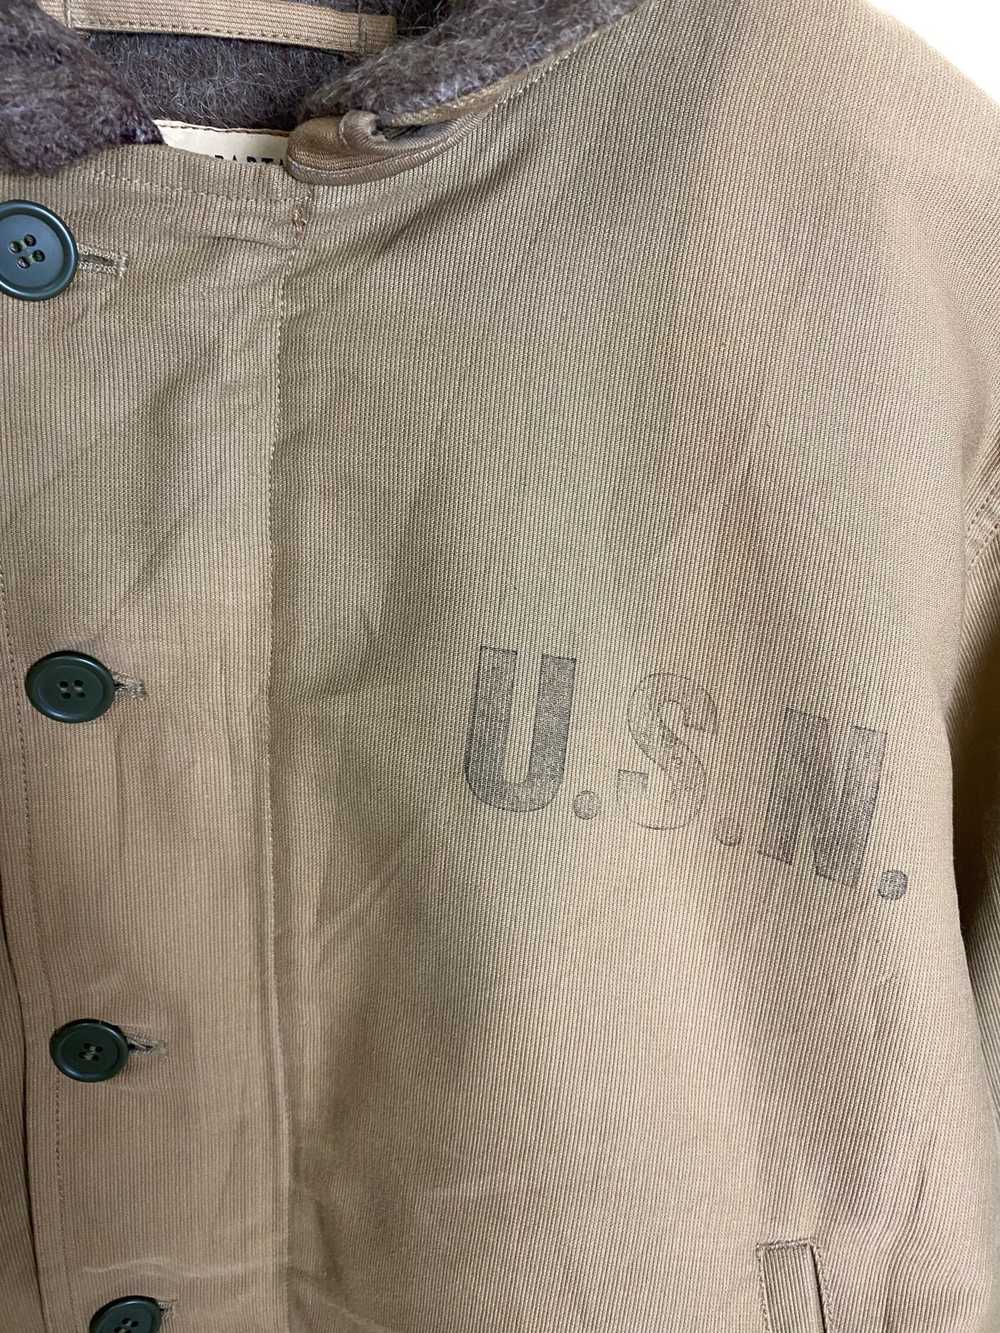 Buzz Rickson's - Vintage N-1 USN Deck Jacket - image 3